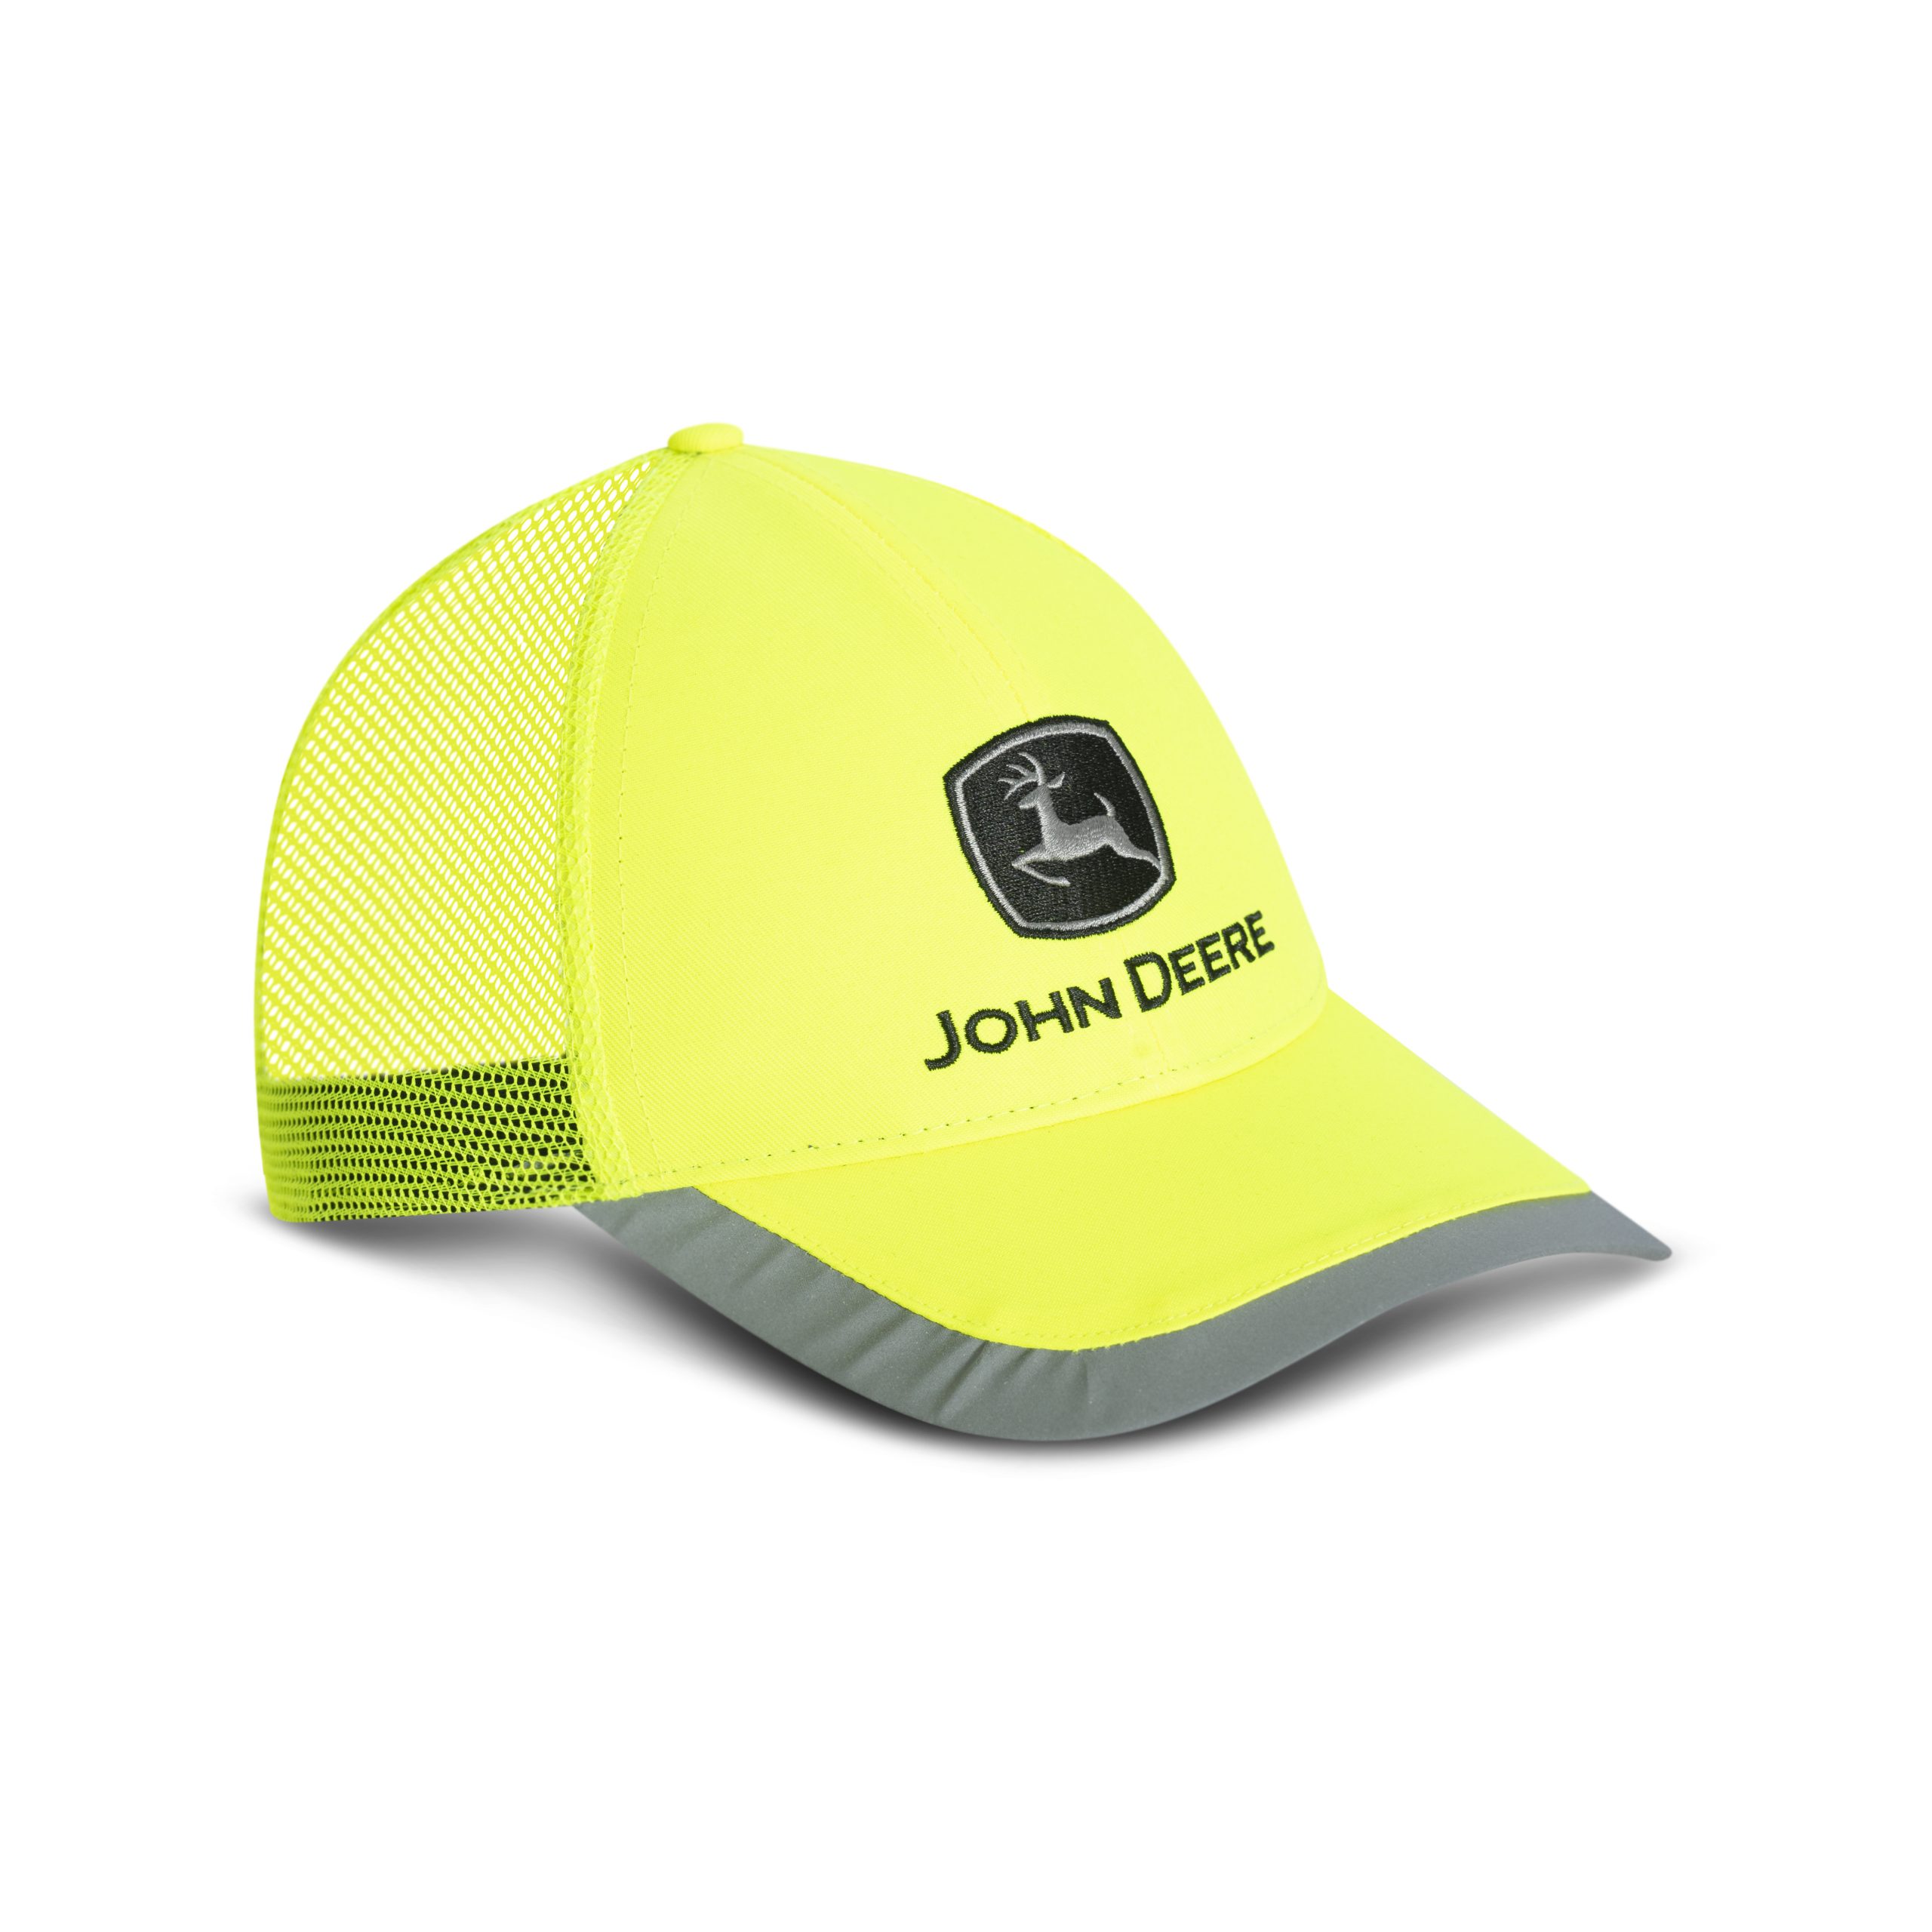 John Deere Gorra de malla completa amarilla - LP14424, Amarillo